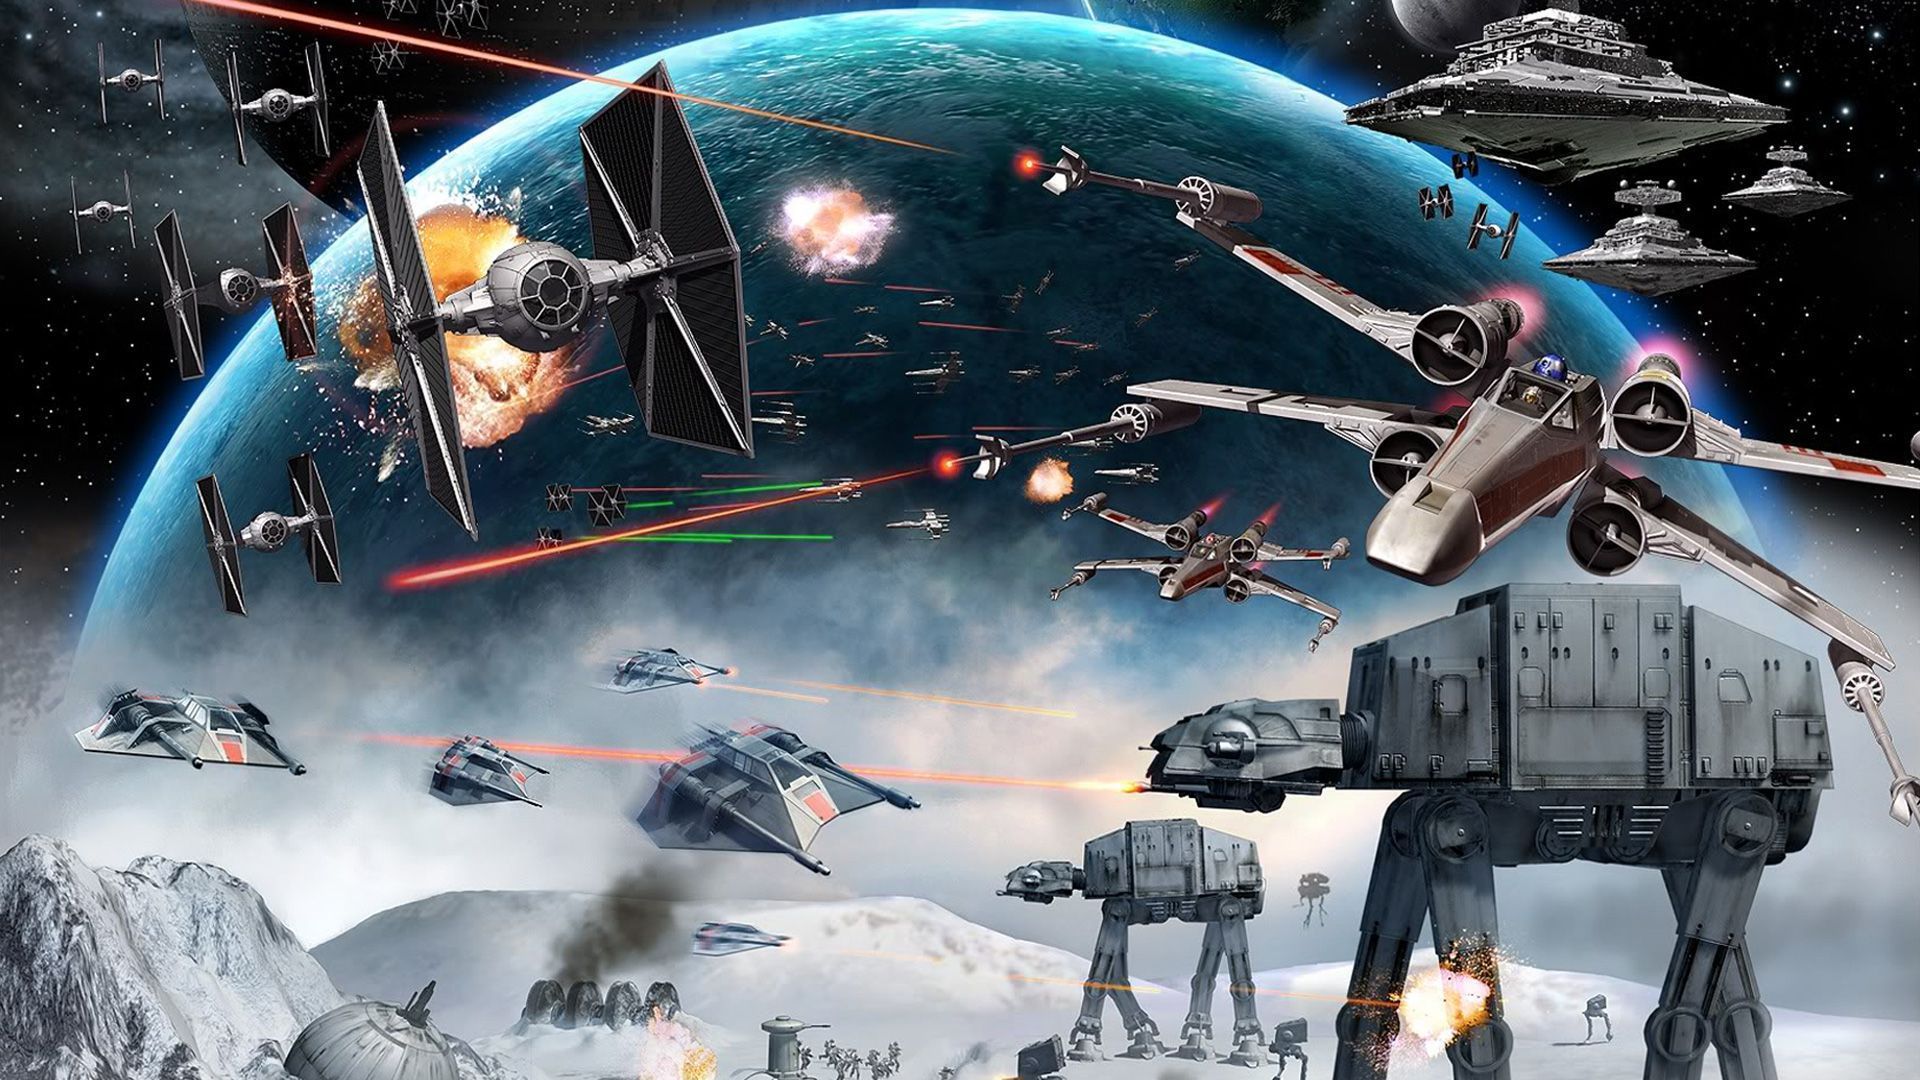 Download Star Wars Wallpaper Hd - Techlogitic